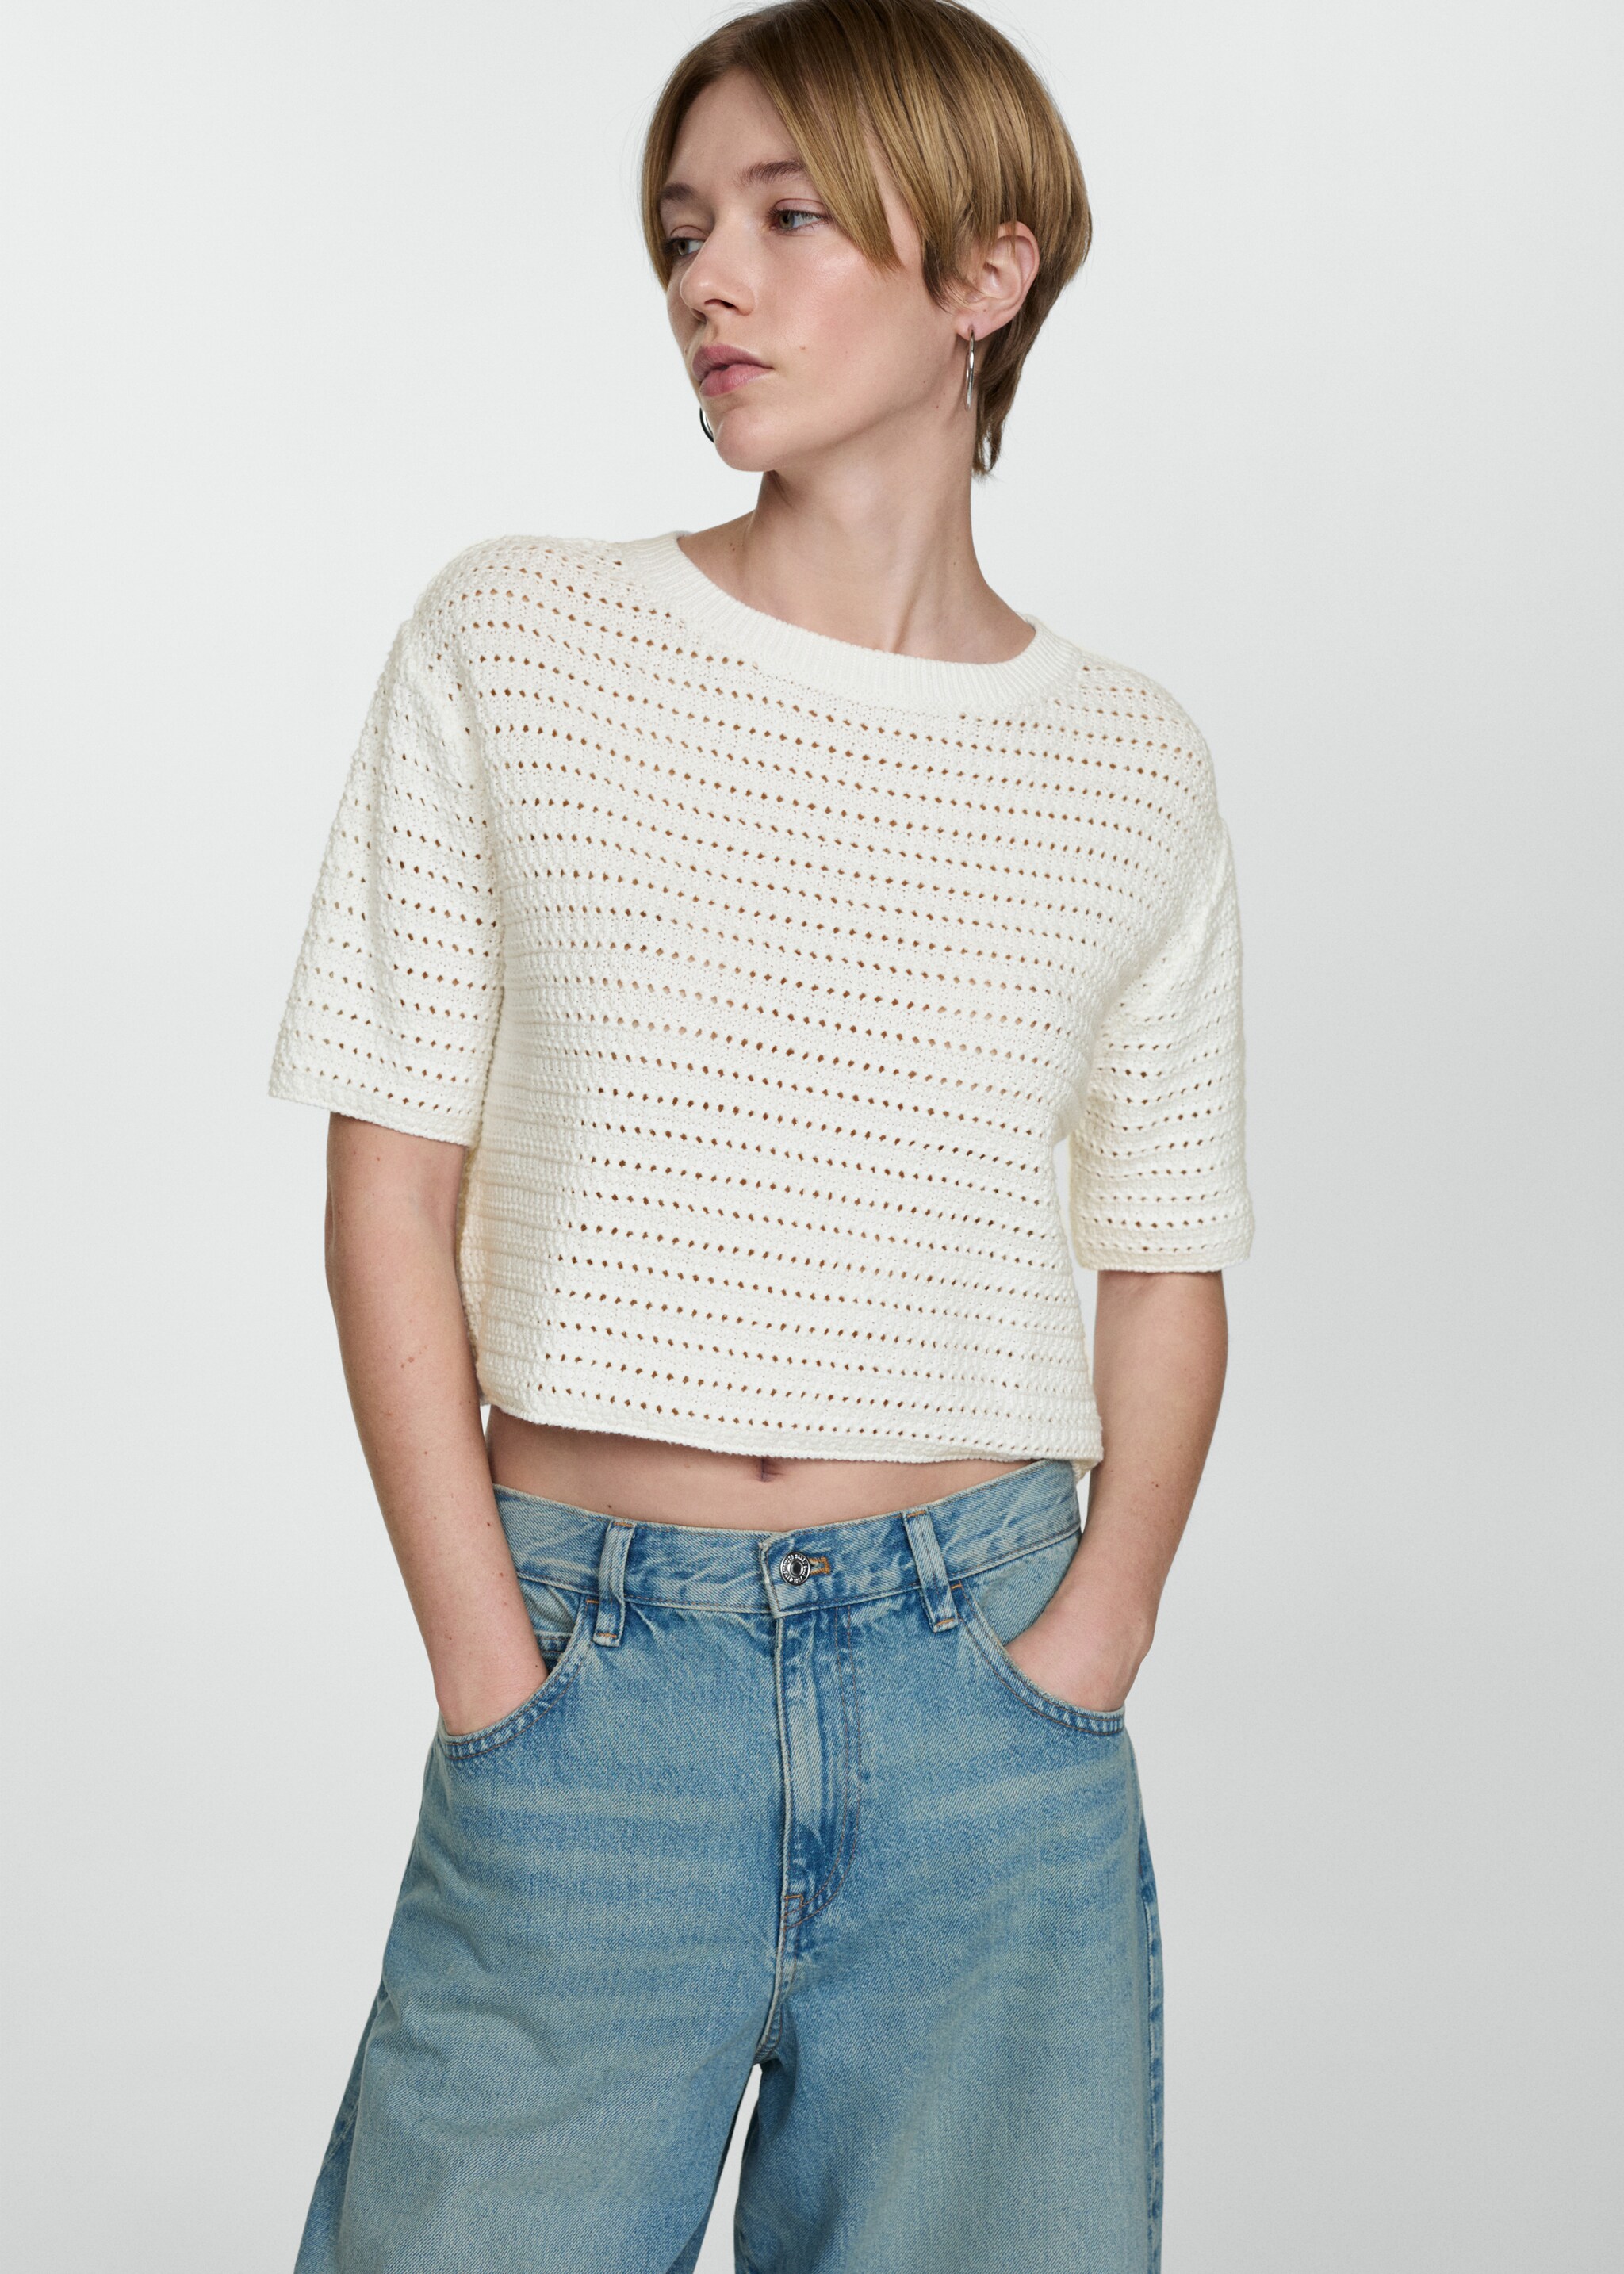 Knitted sweater with openwork details - Середній план